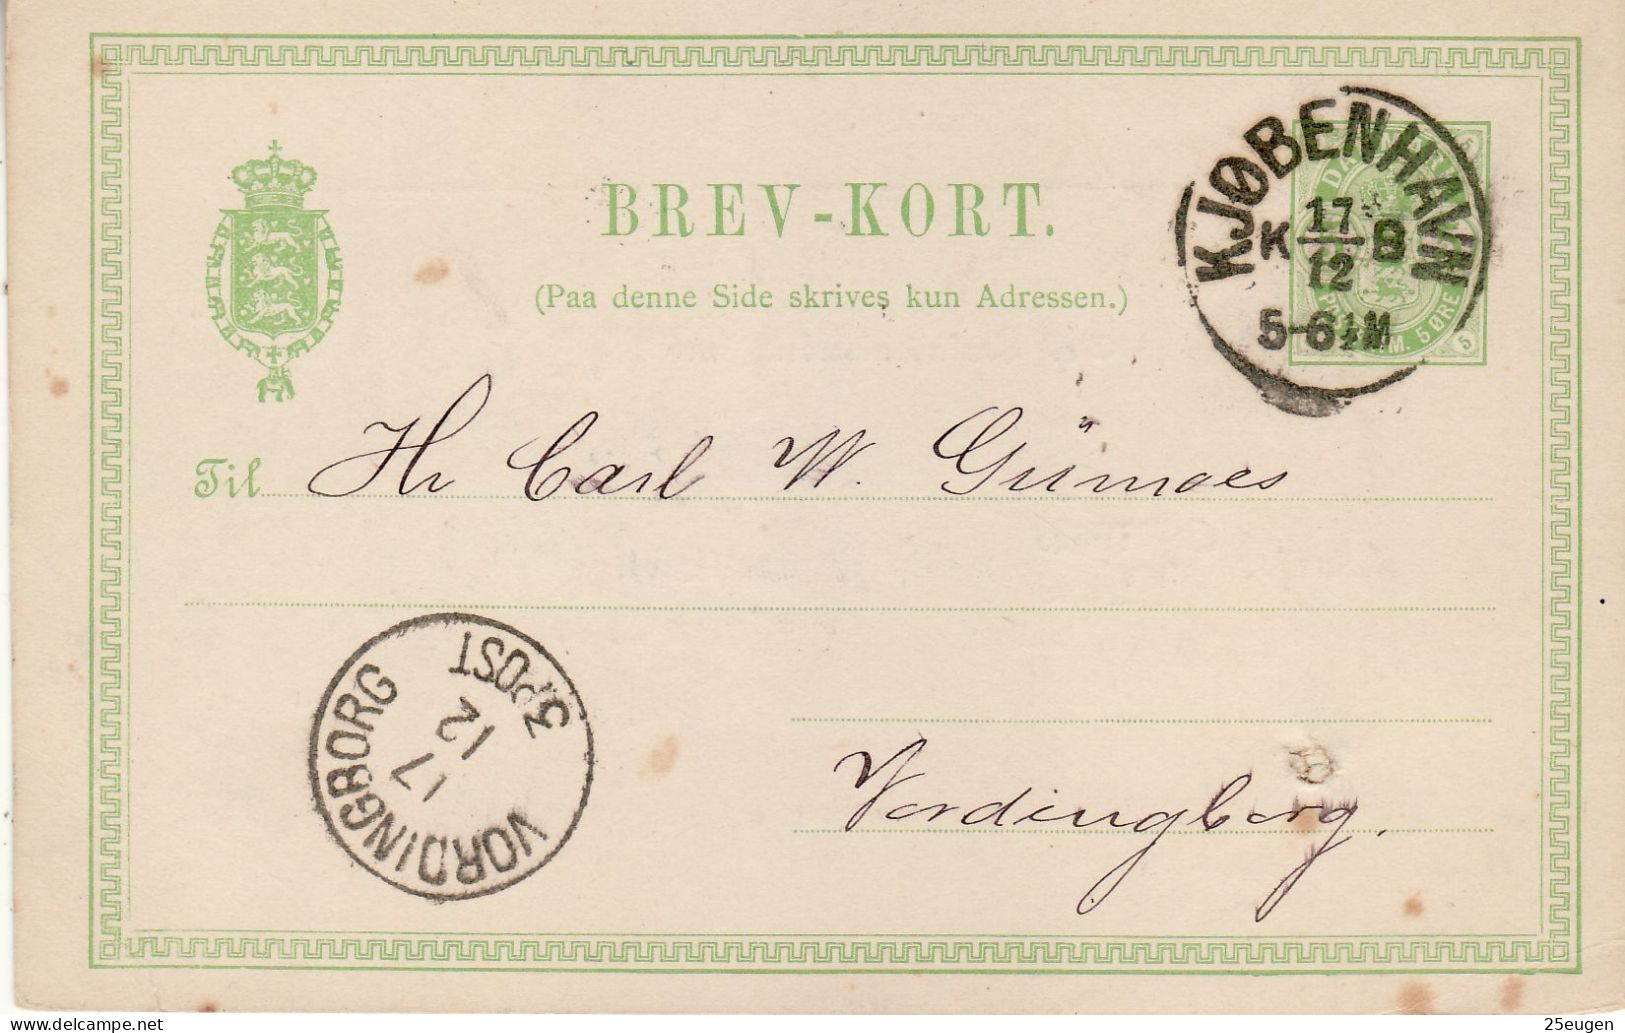 DENMARK 1889 POSTCARD MiNr P 28 II B SENT FROM KOBENHAVN TO VORDINGBORG - Enteros Postales